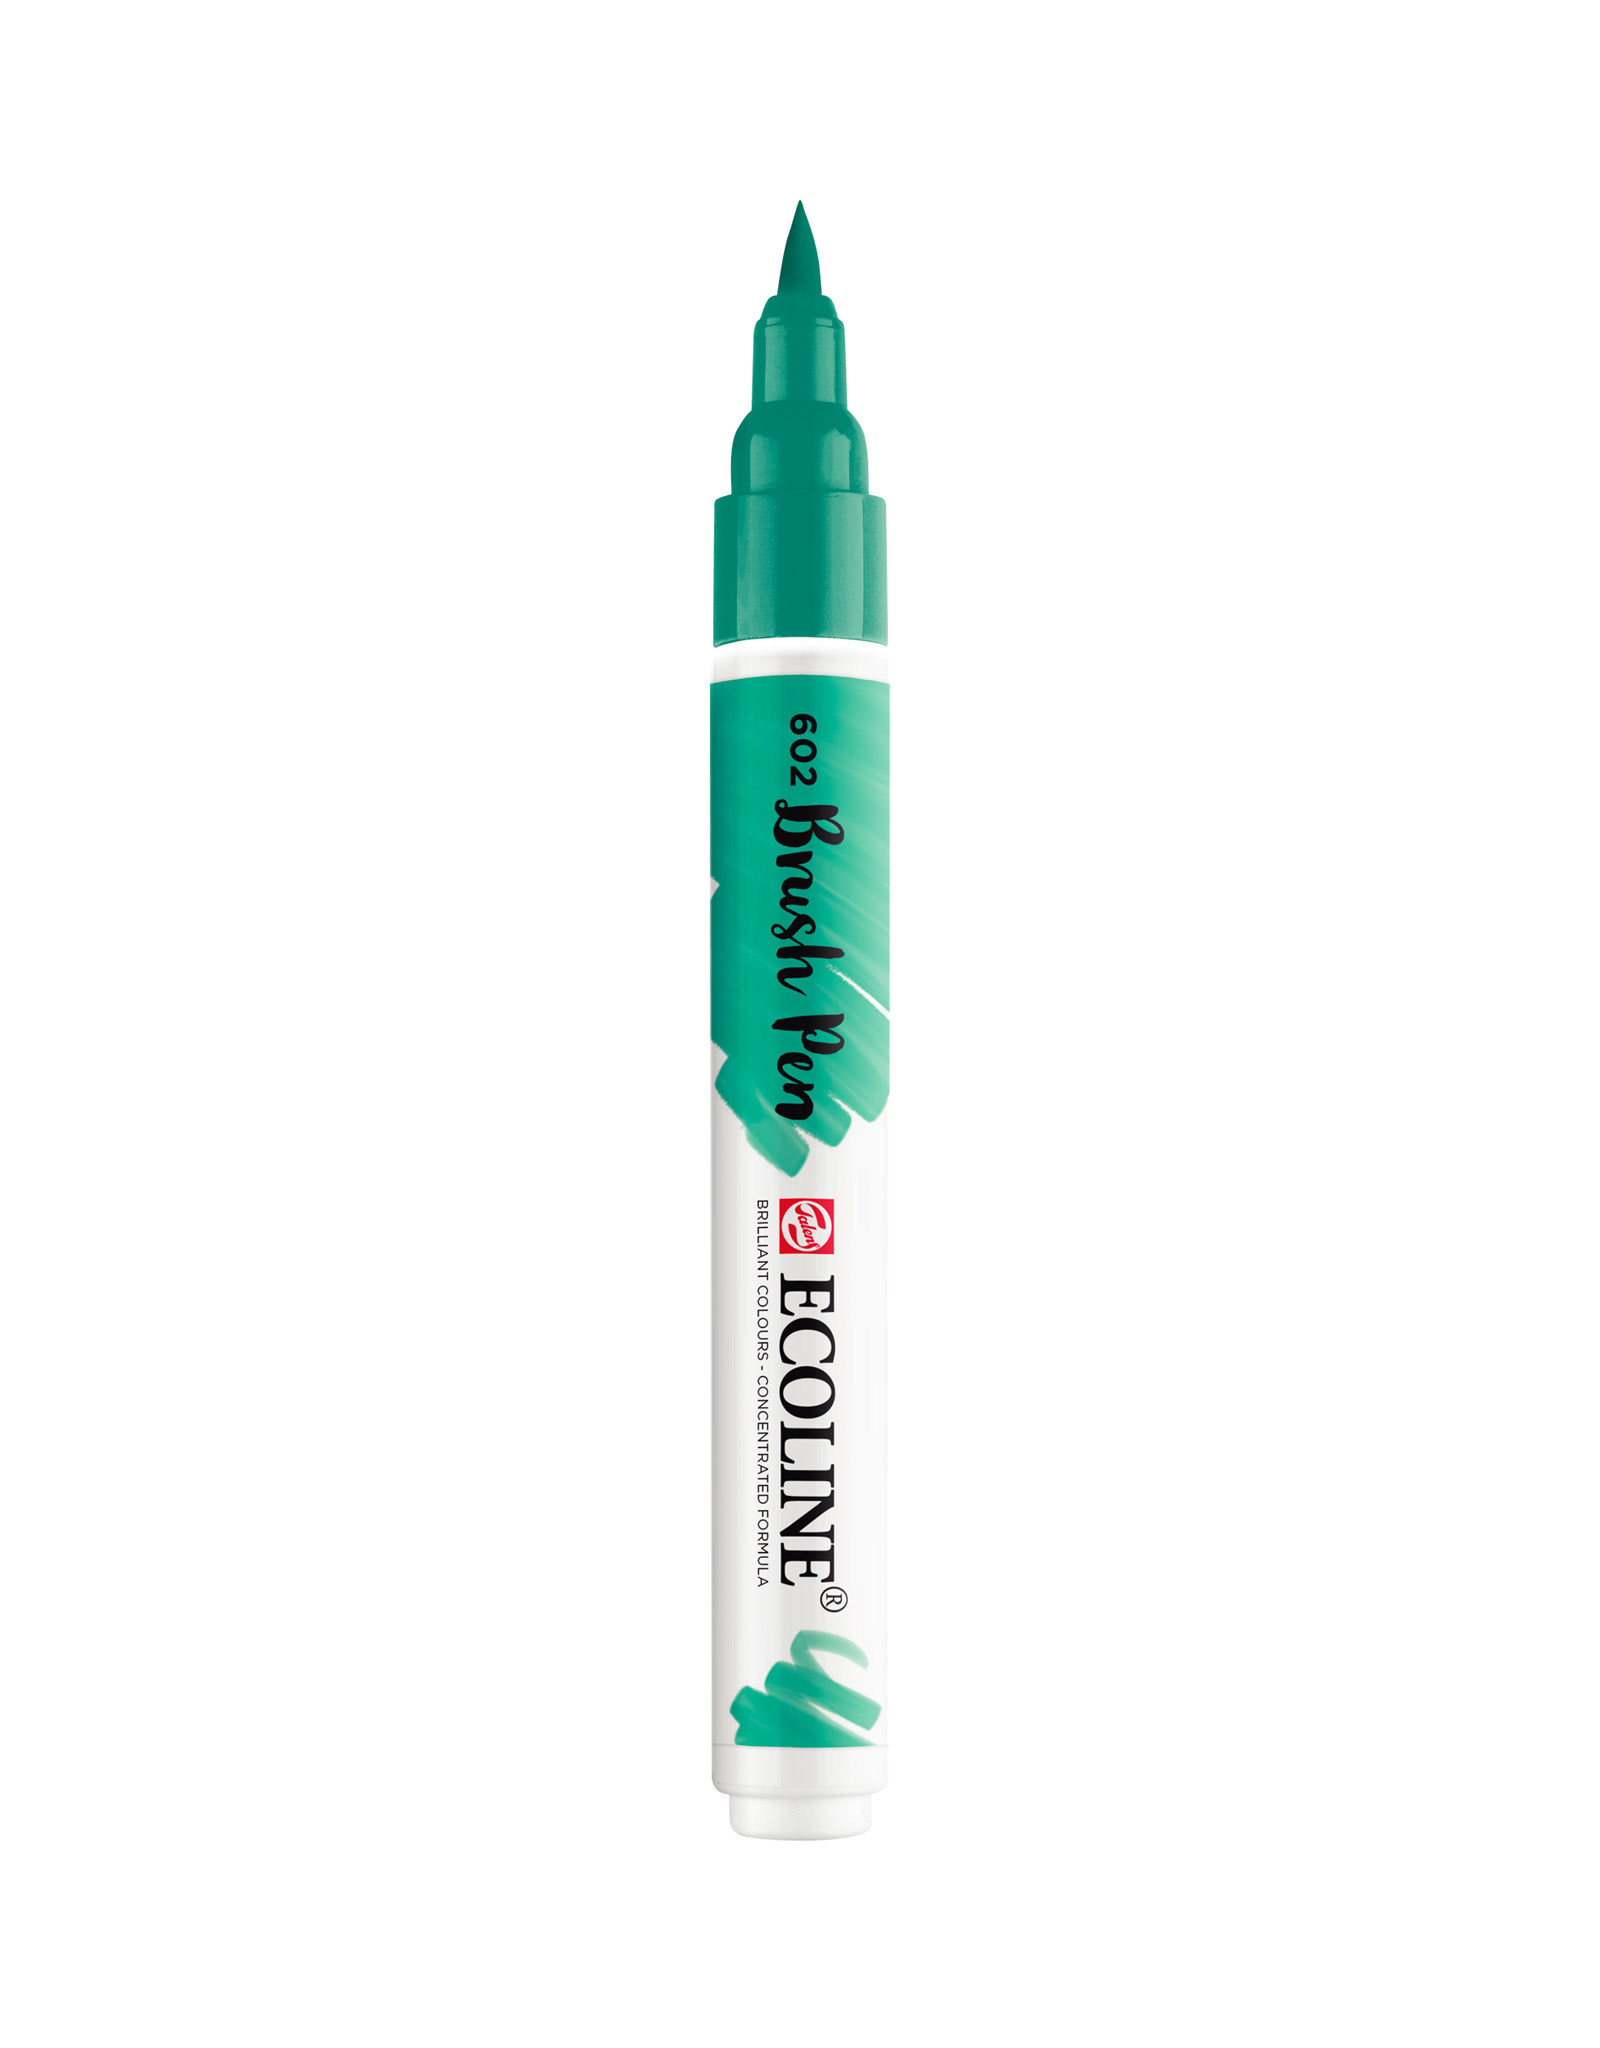 Royal Talens Ecoline Watercolour Brush Pen, Deep Green